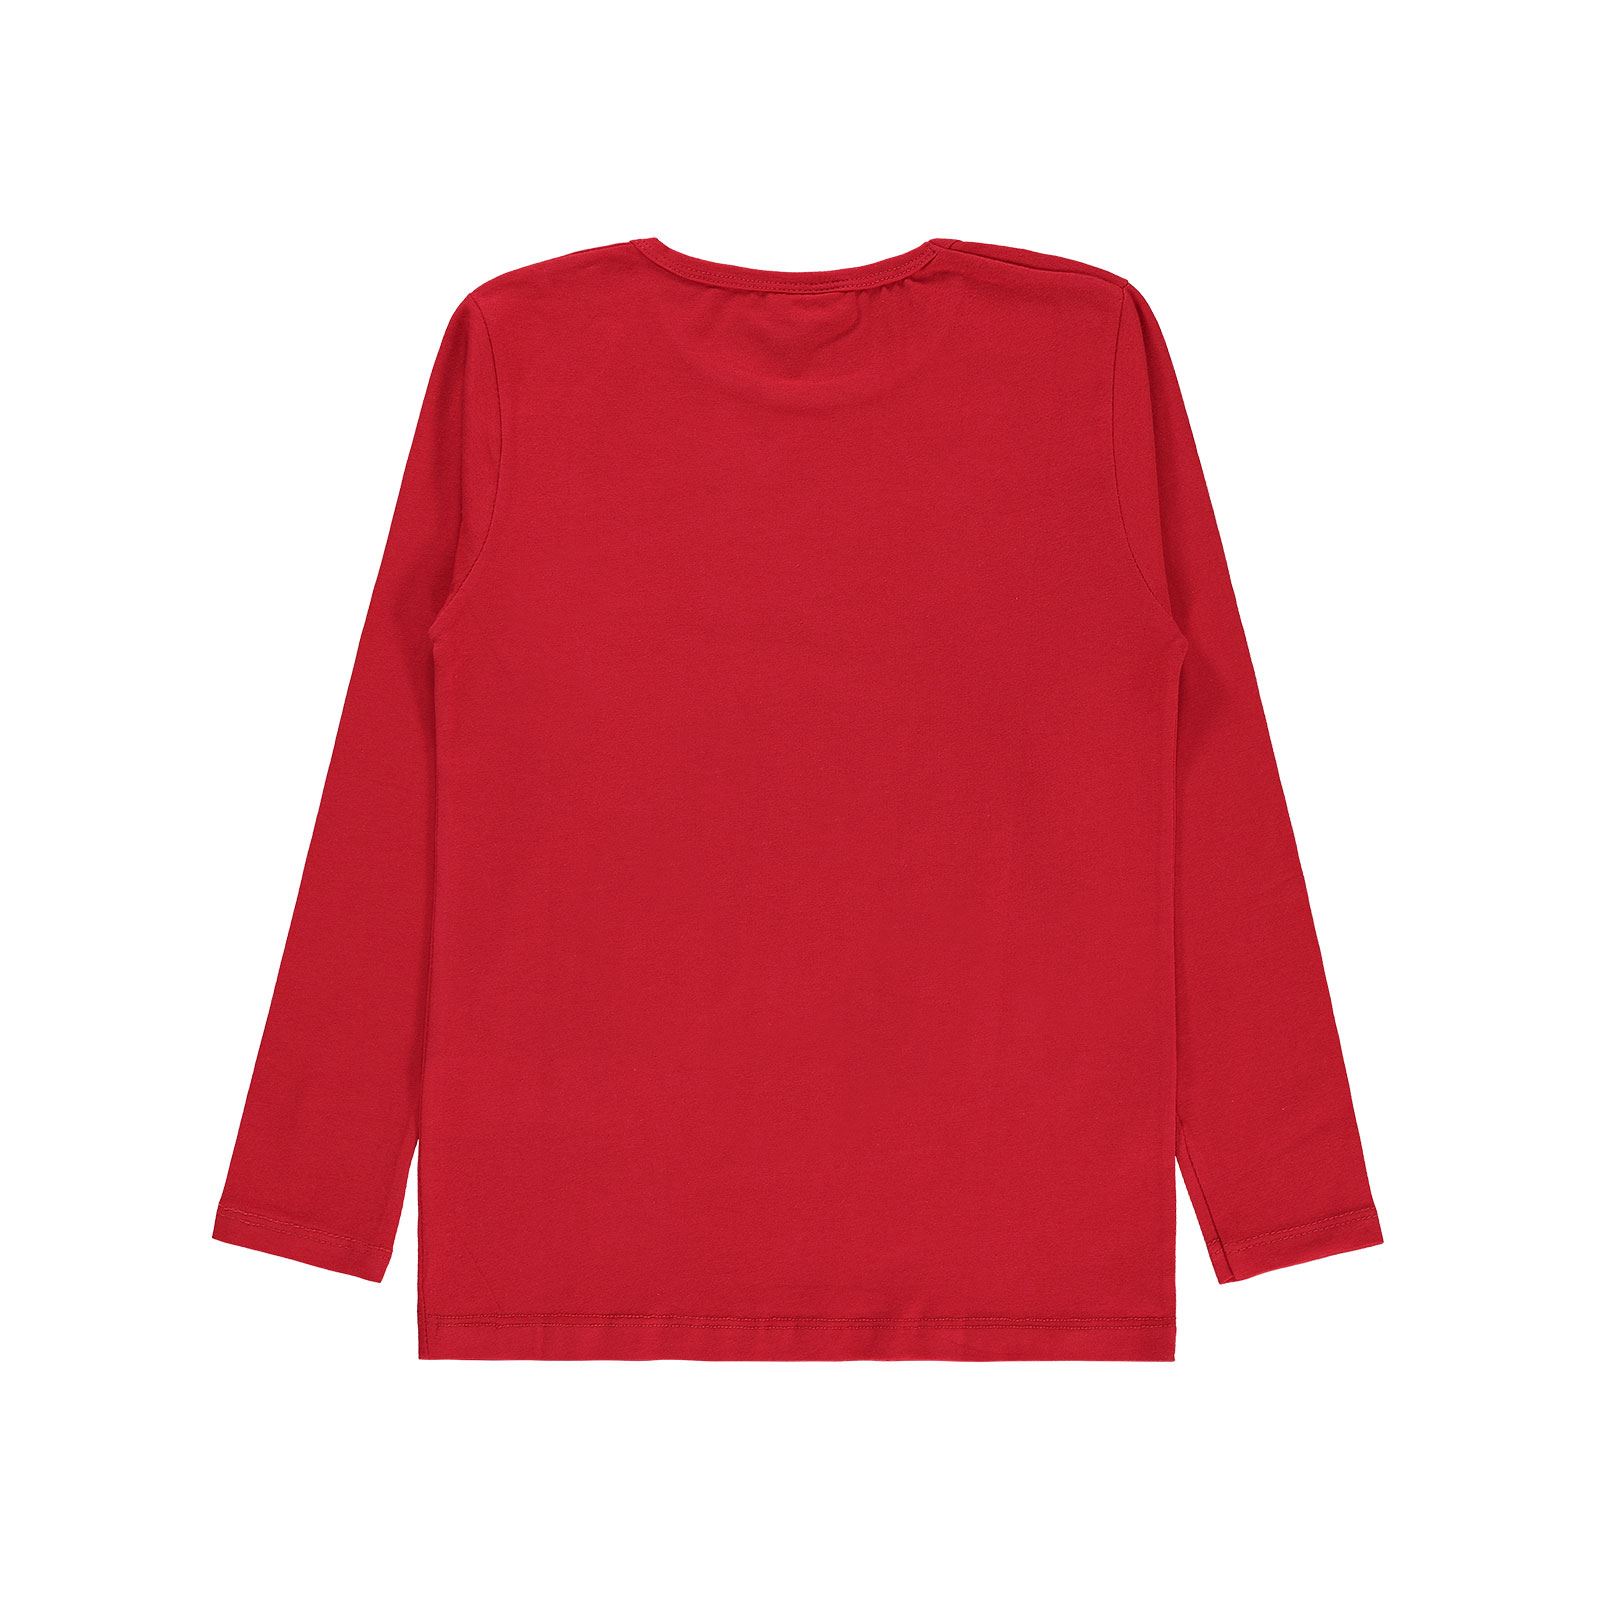 P&P Kız Çocuk Sweatshirt 10-13 Yaş Kırmızı